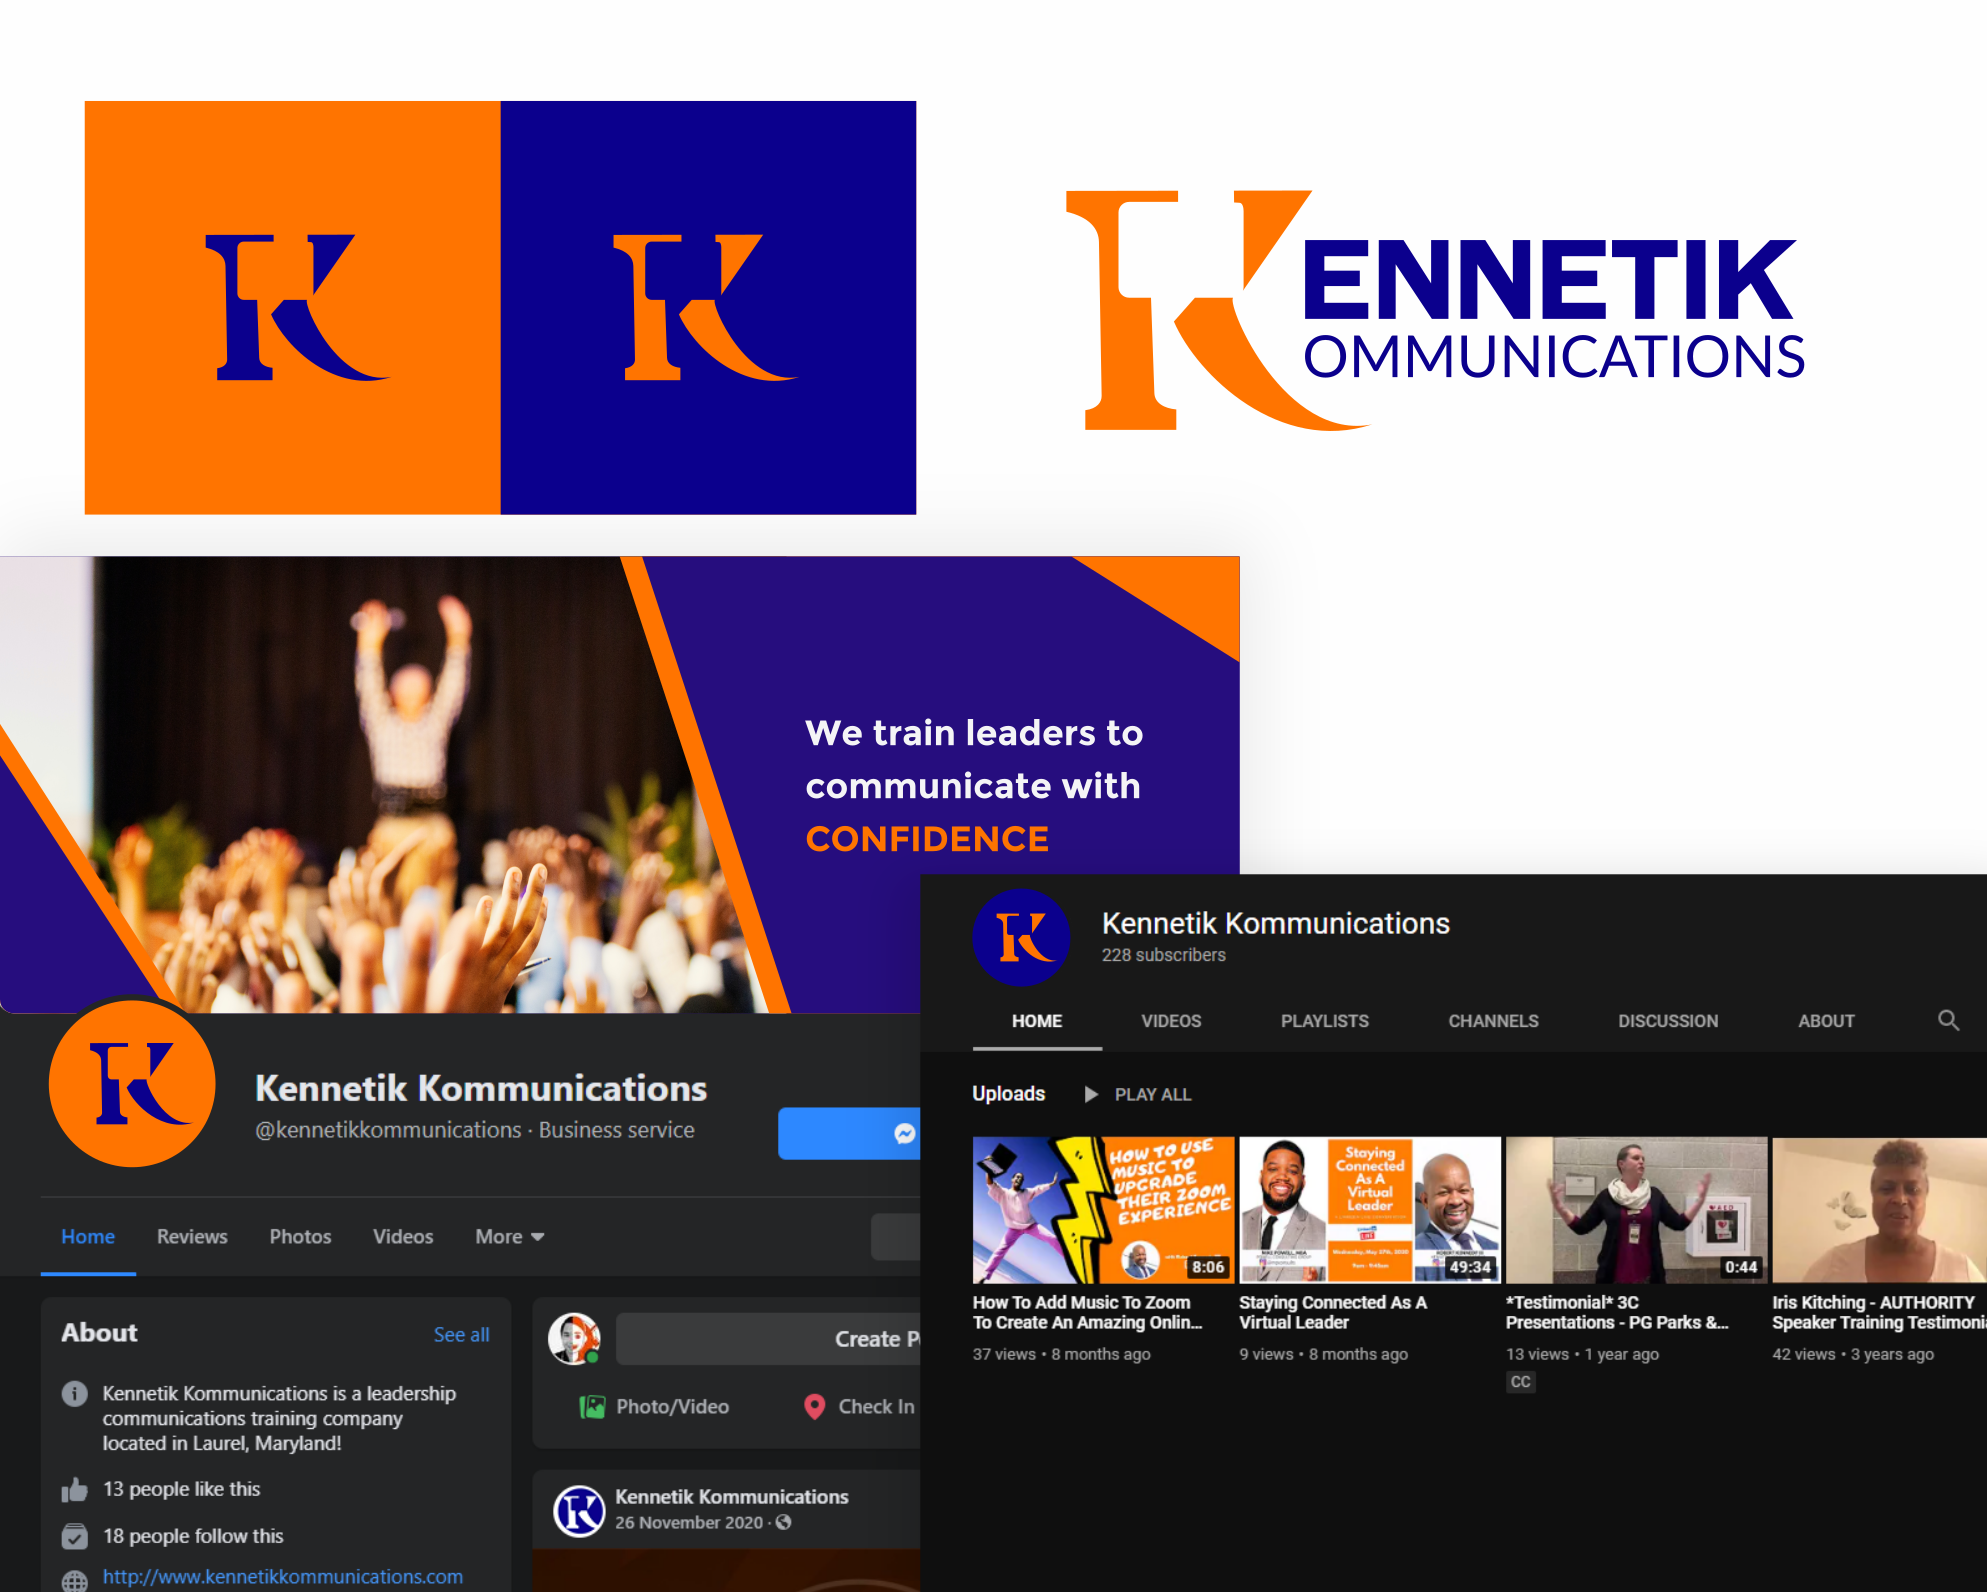 Logo and banner design for Kennetik Kommunications. Designed by Johnery